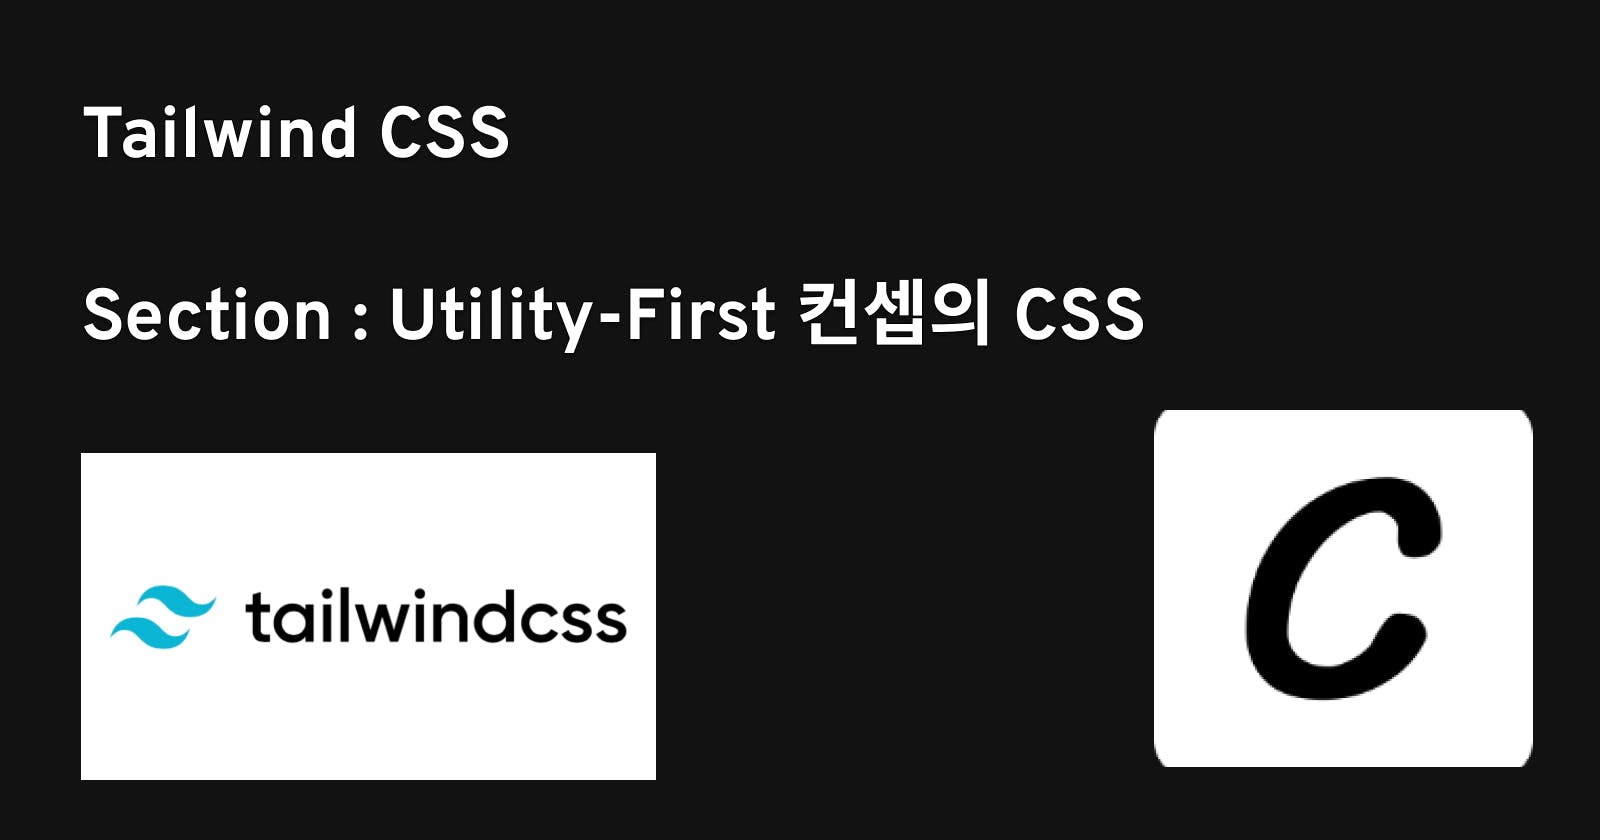 Utility-First 컨셉을 가진 CSS 프레임워크